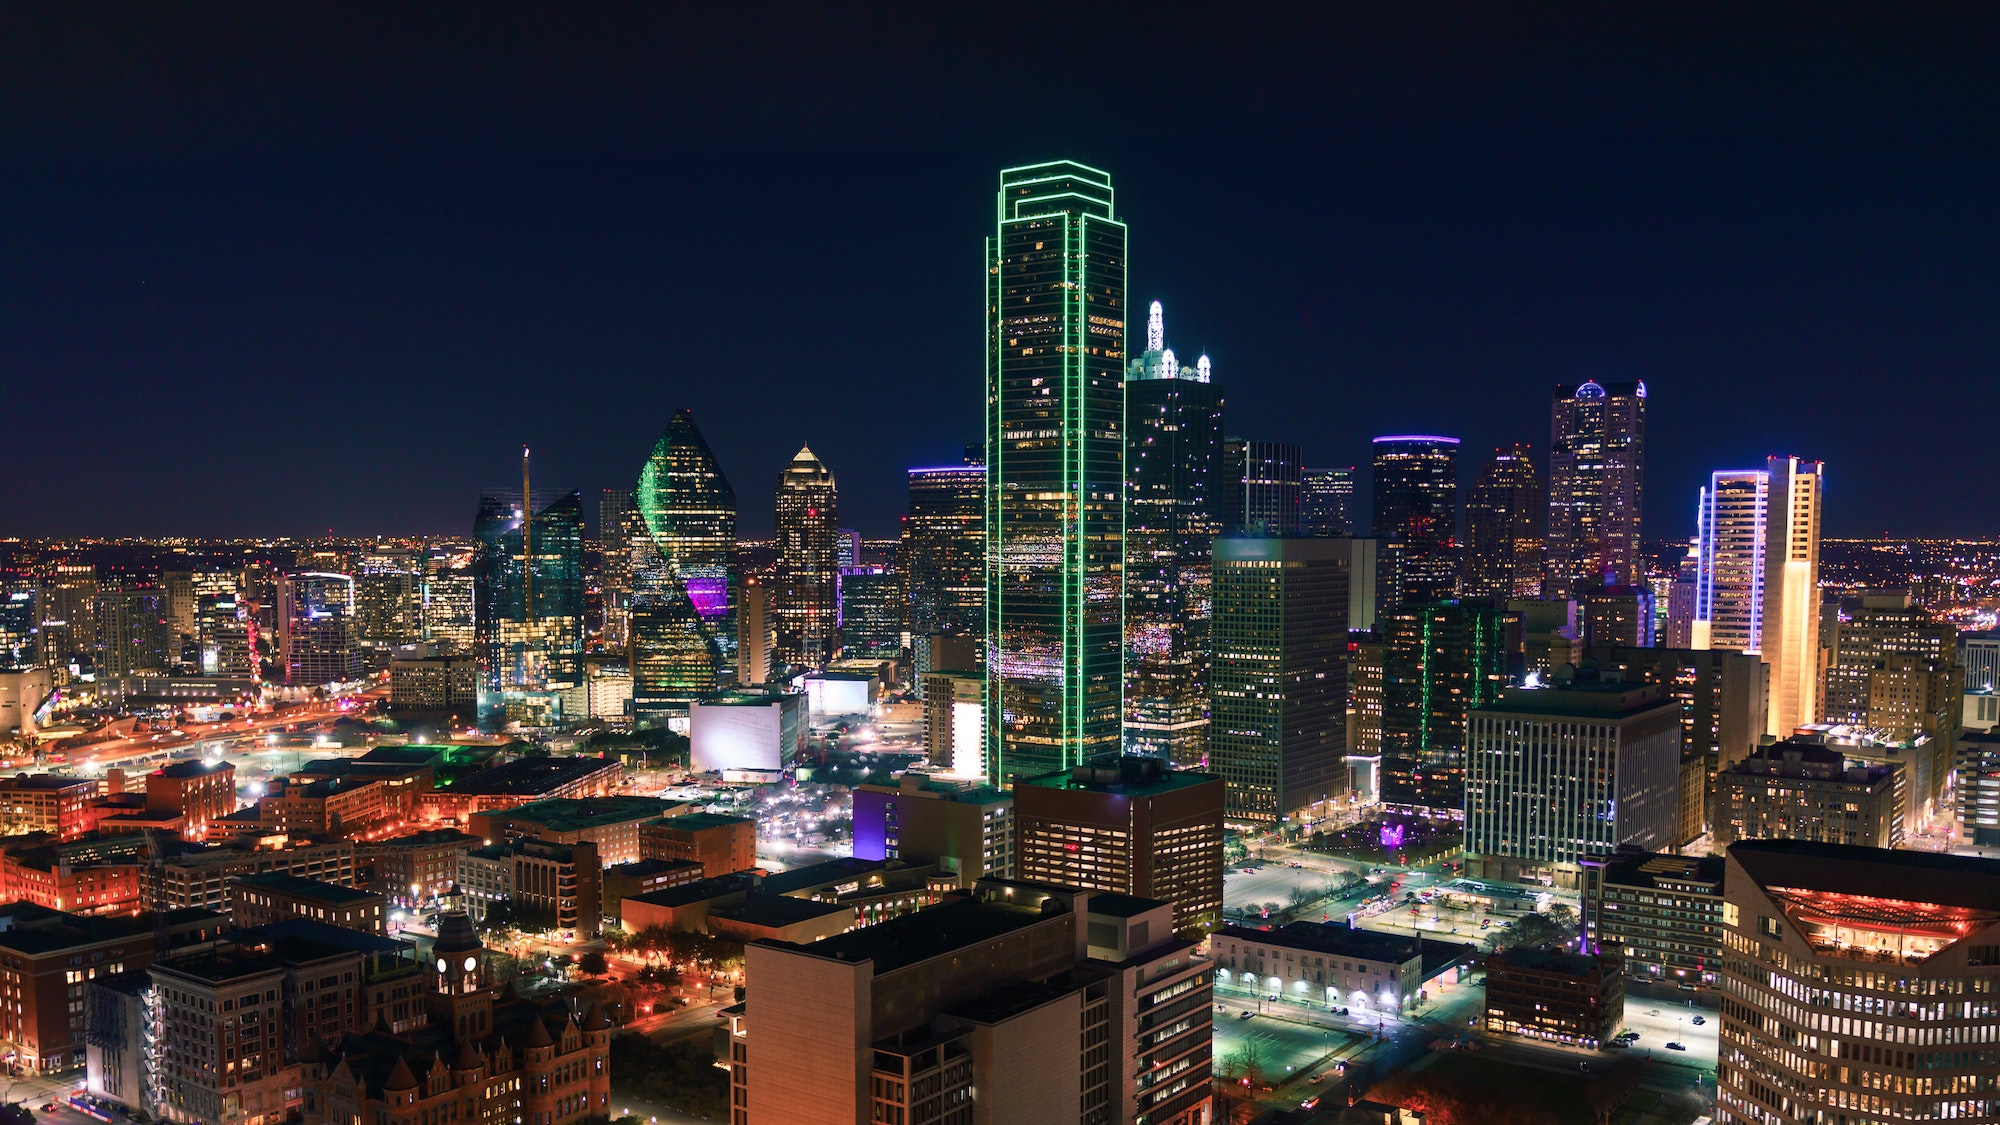 dallas-texas-cityscape-with-skyscrapers-illuminated-at-night.jpg